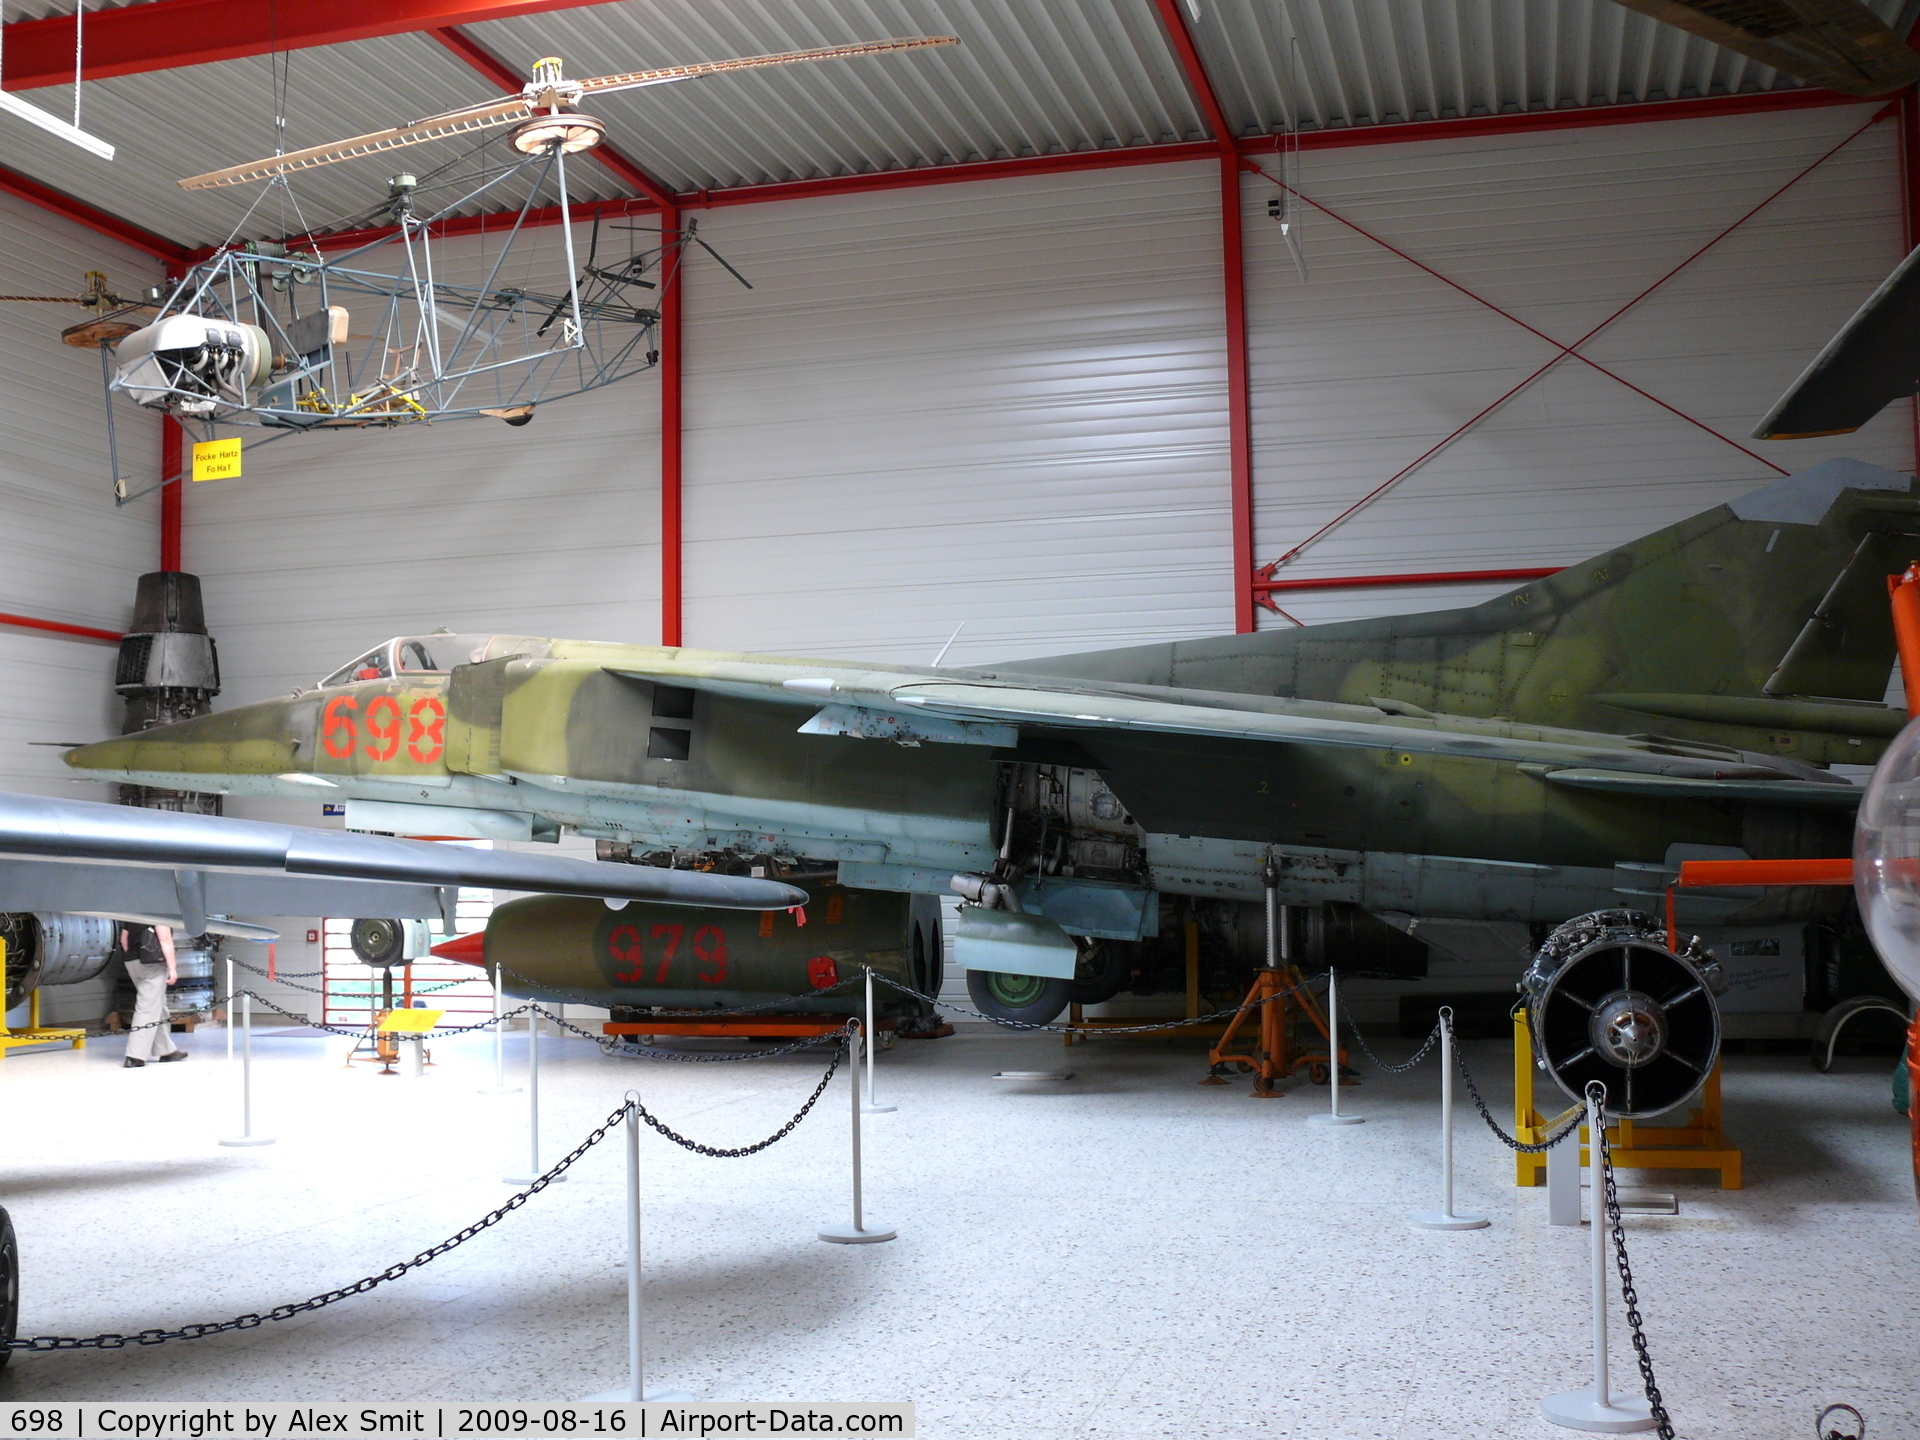 698, Mikoyan-Gurevich MiG-23BN C/N 0393214214, Mikoyan Mig23BN Flogger 698 East German Air Force in the Hermerskeil Museum Flugasusstellung Junior